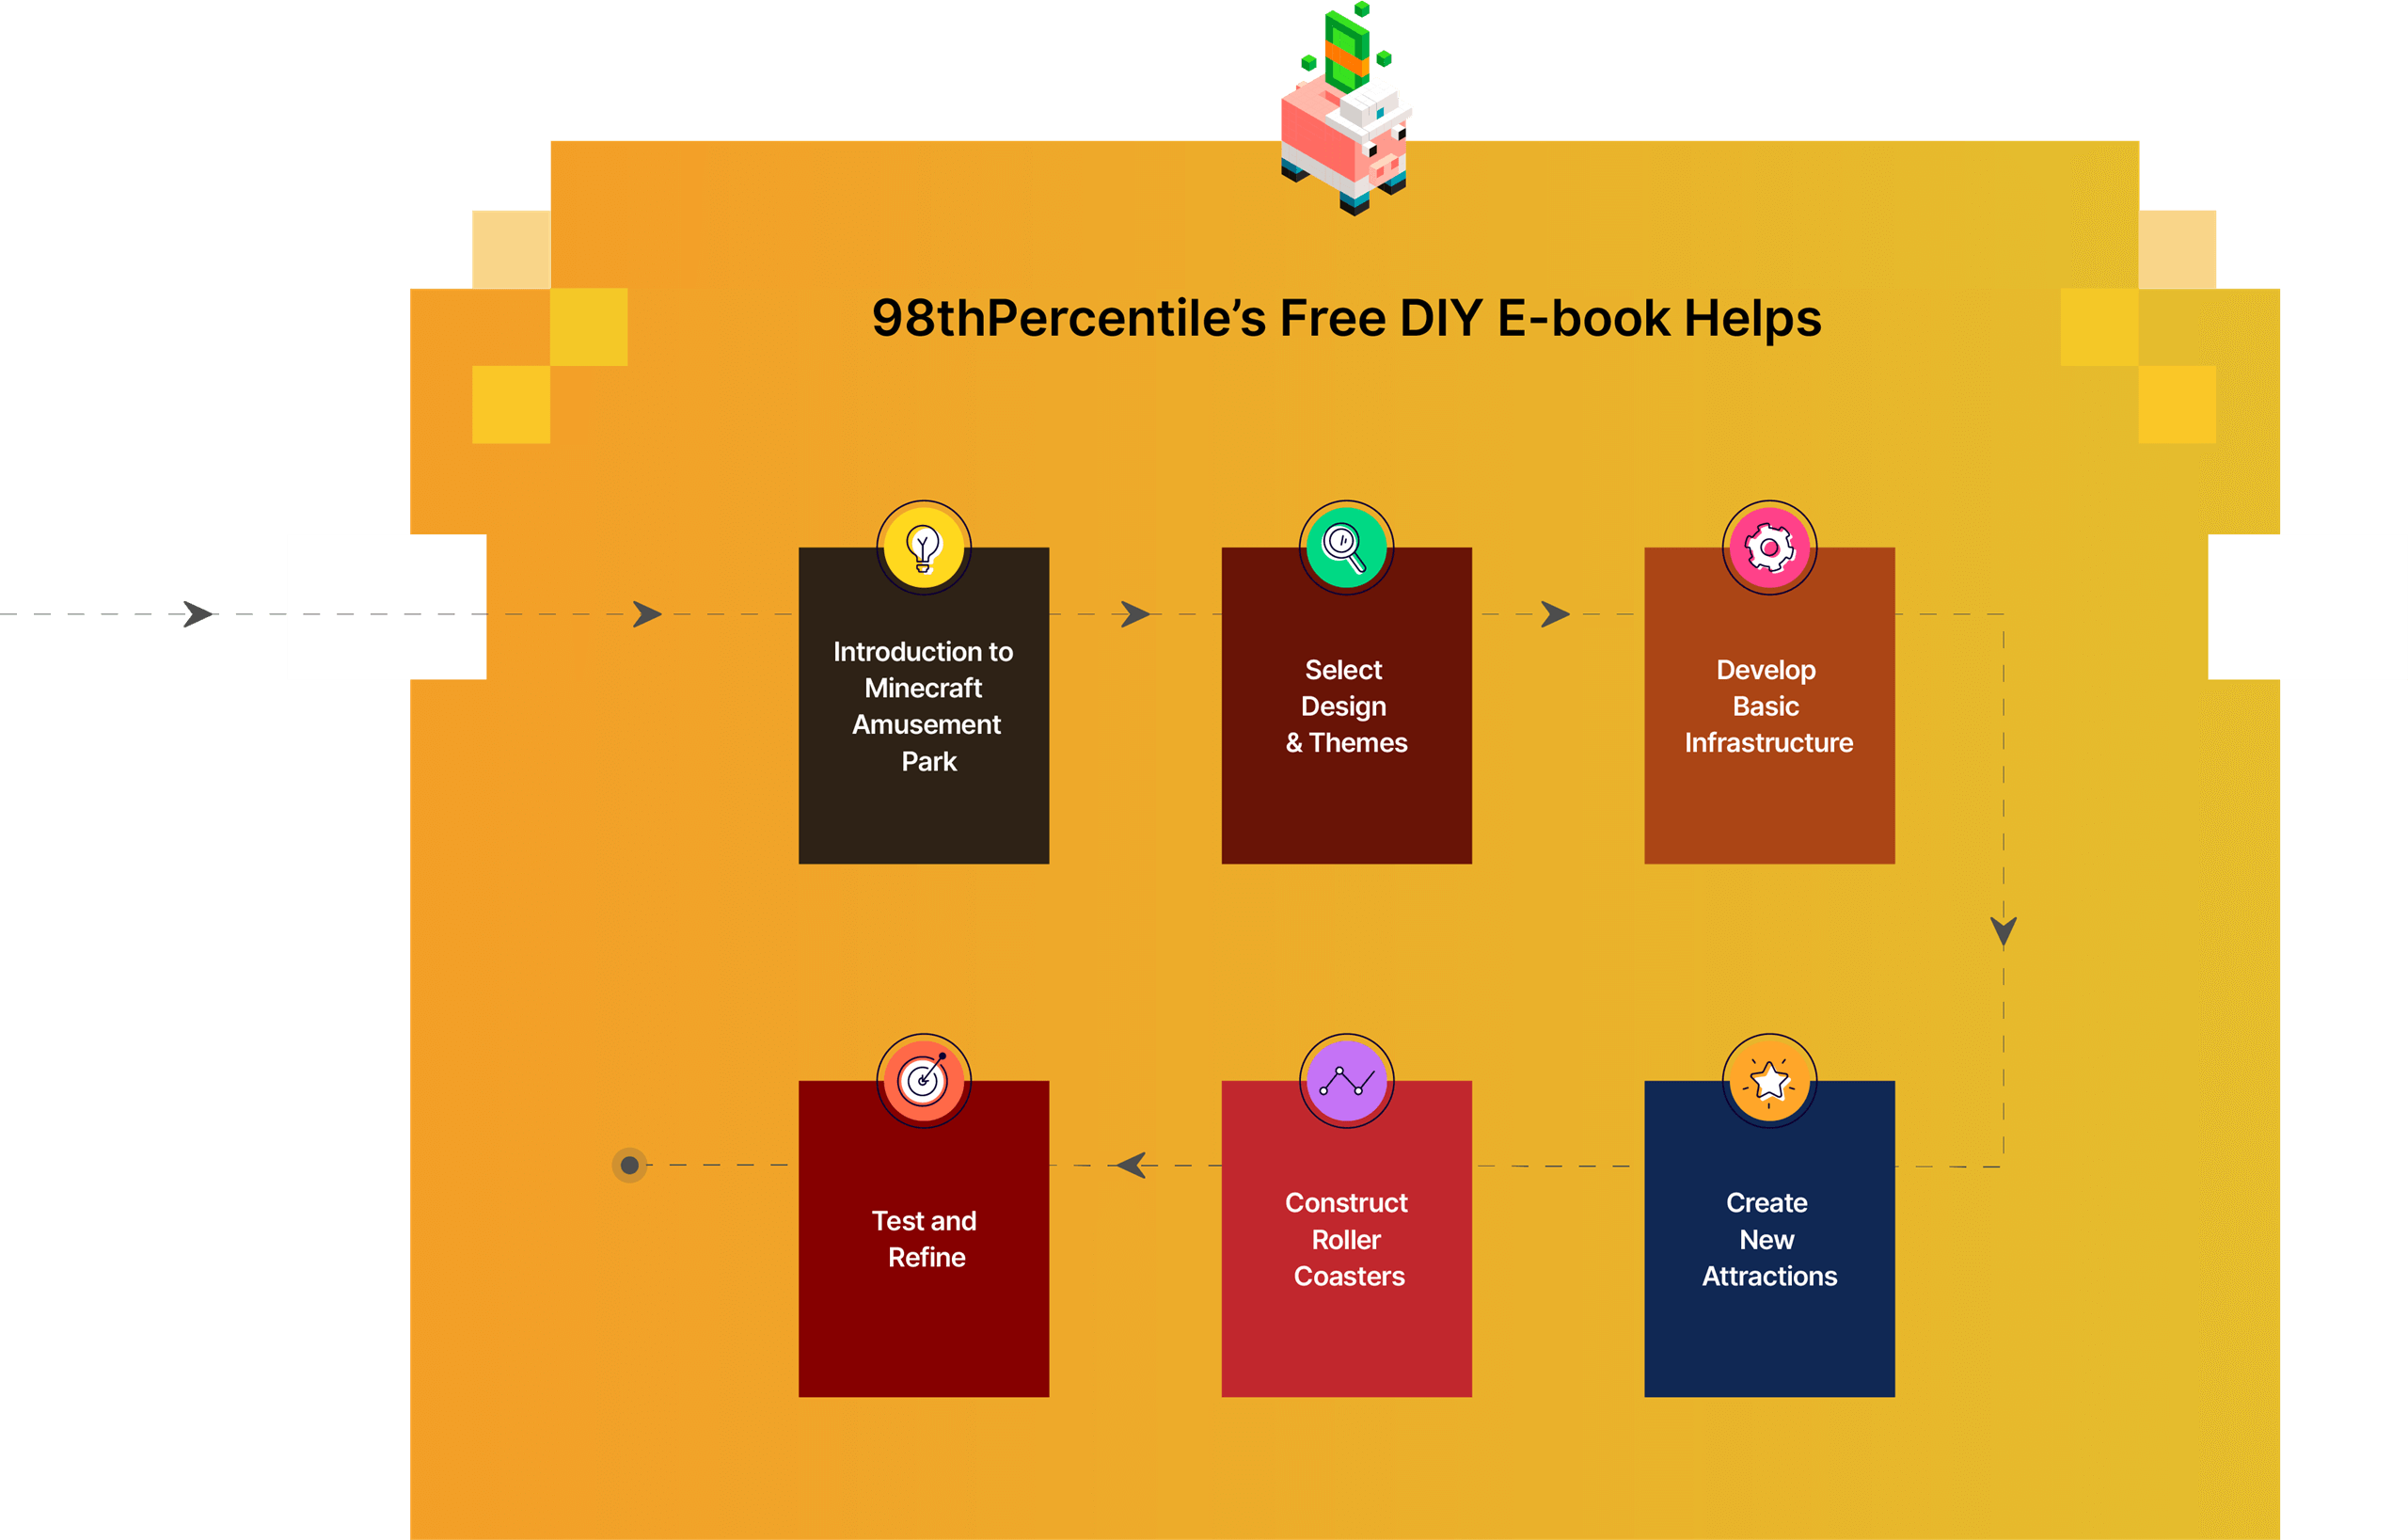 98thPercentile’s Free DIY E-book Helps